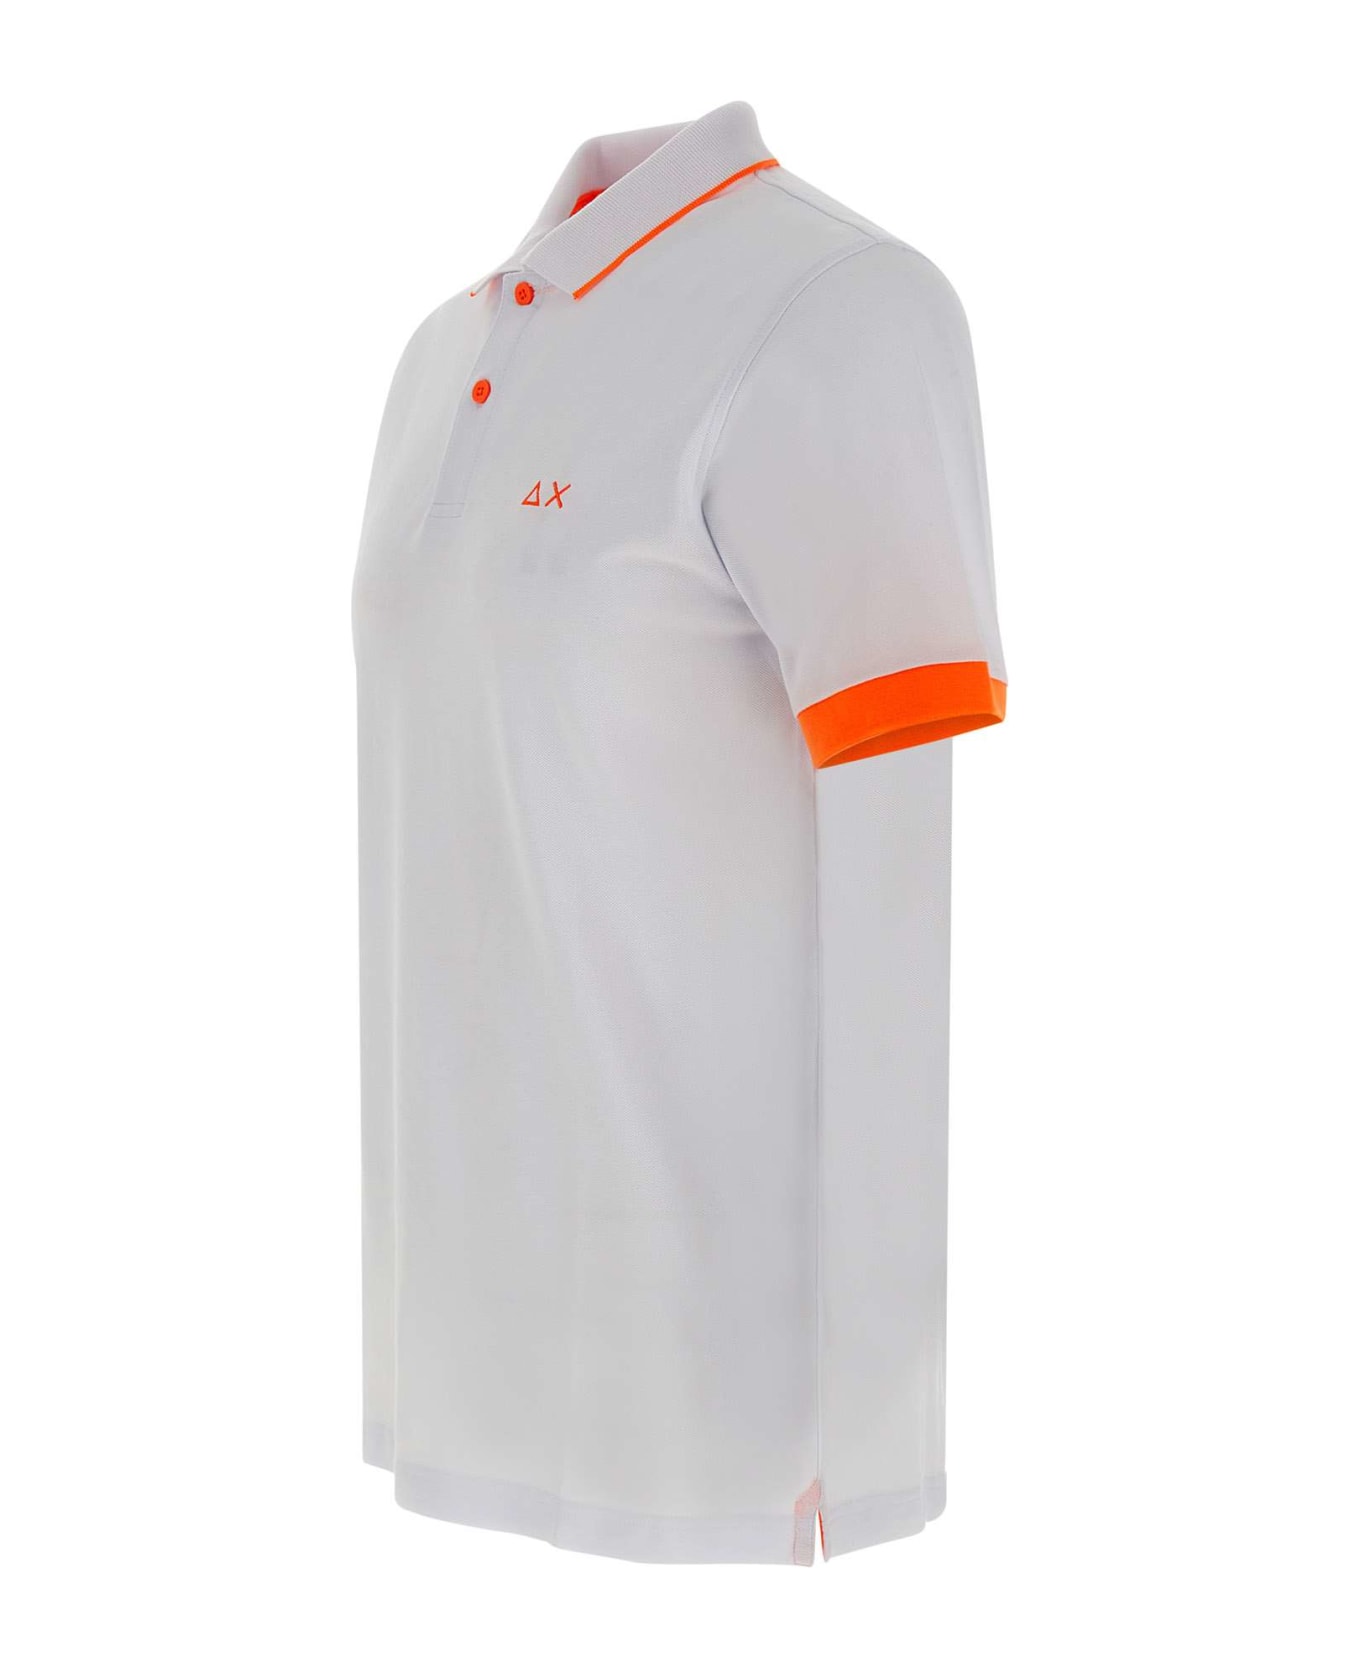 Sun 68 "small Stripe" Cotton Polo Shirt - WHITE